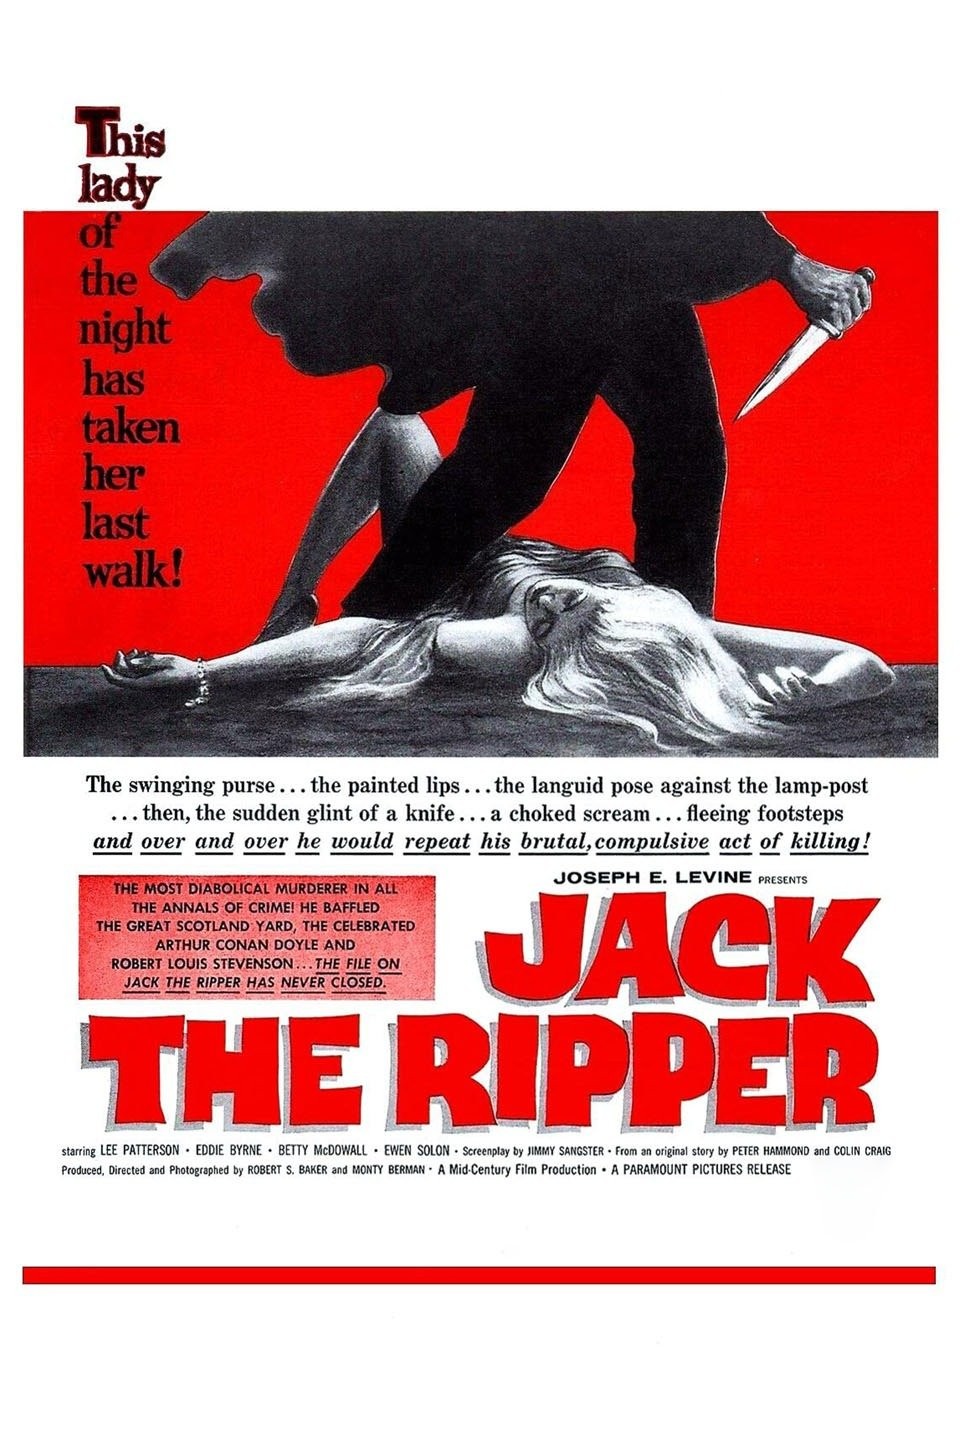 Slasher season 5: An interesting twist on Jack the Ripper (so far)